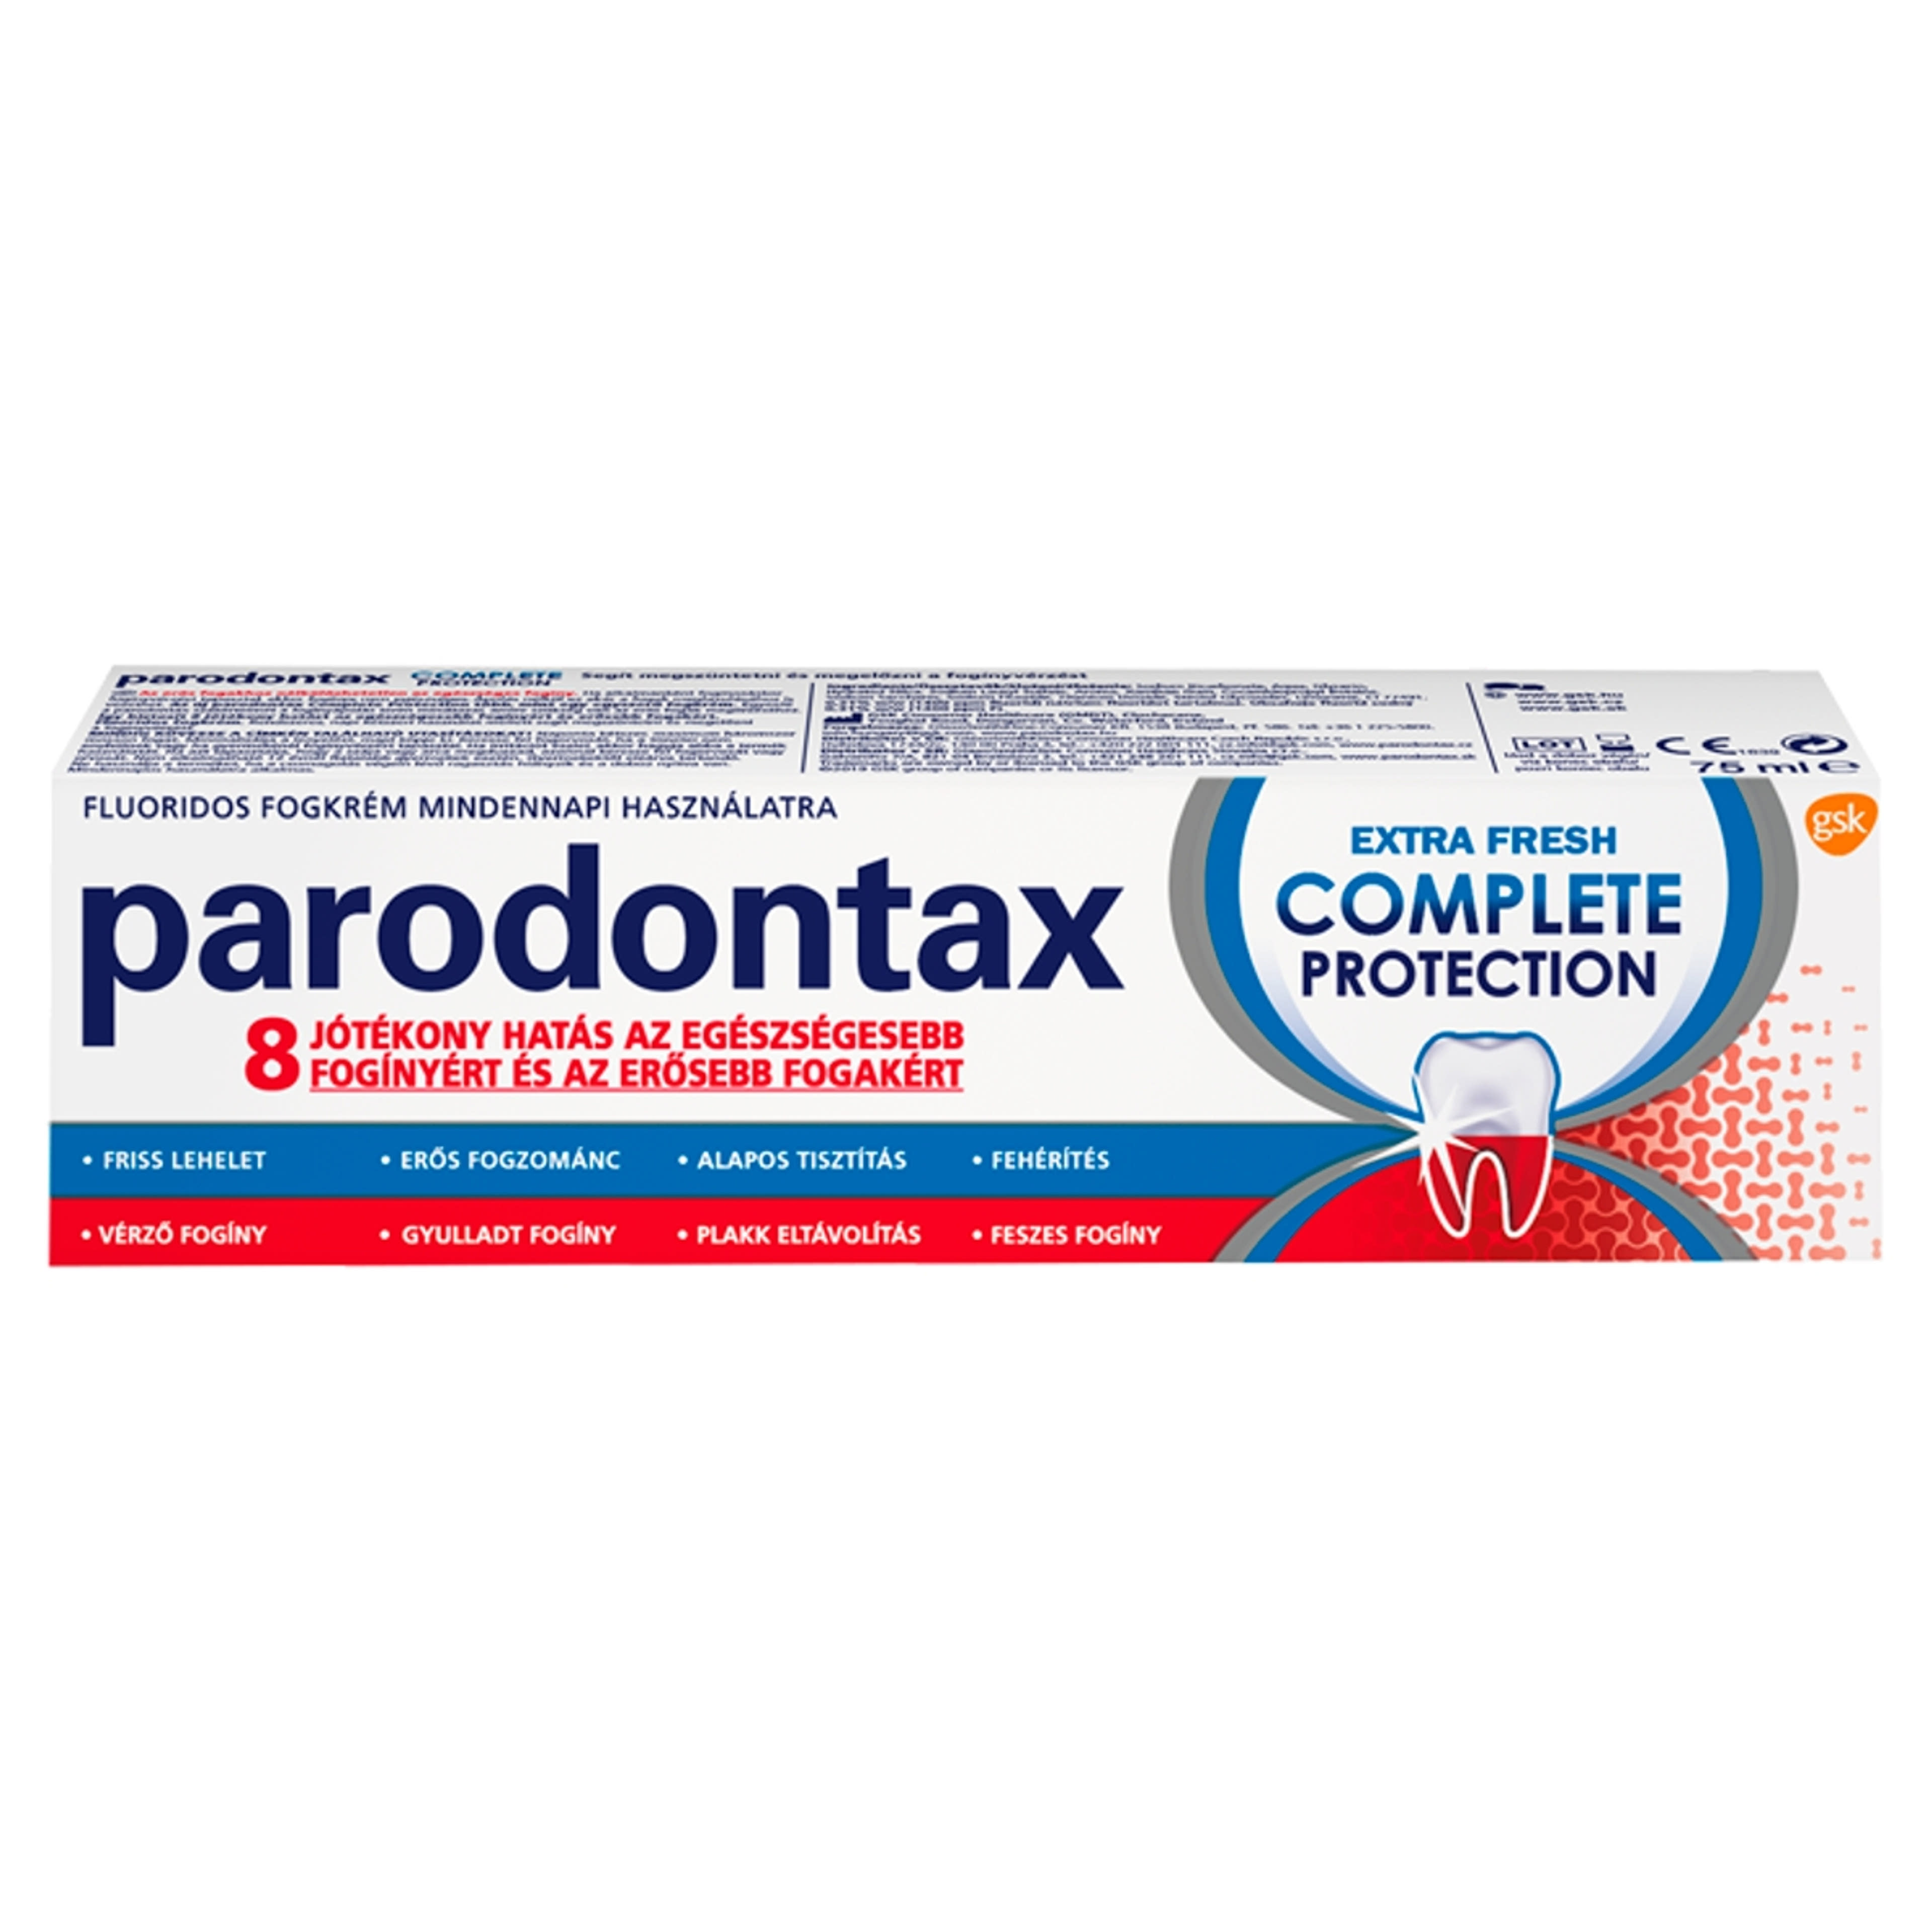 Parodontax Complete Protection Extra Fresh fogkrém - 75 ml